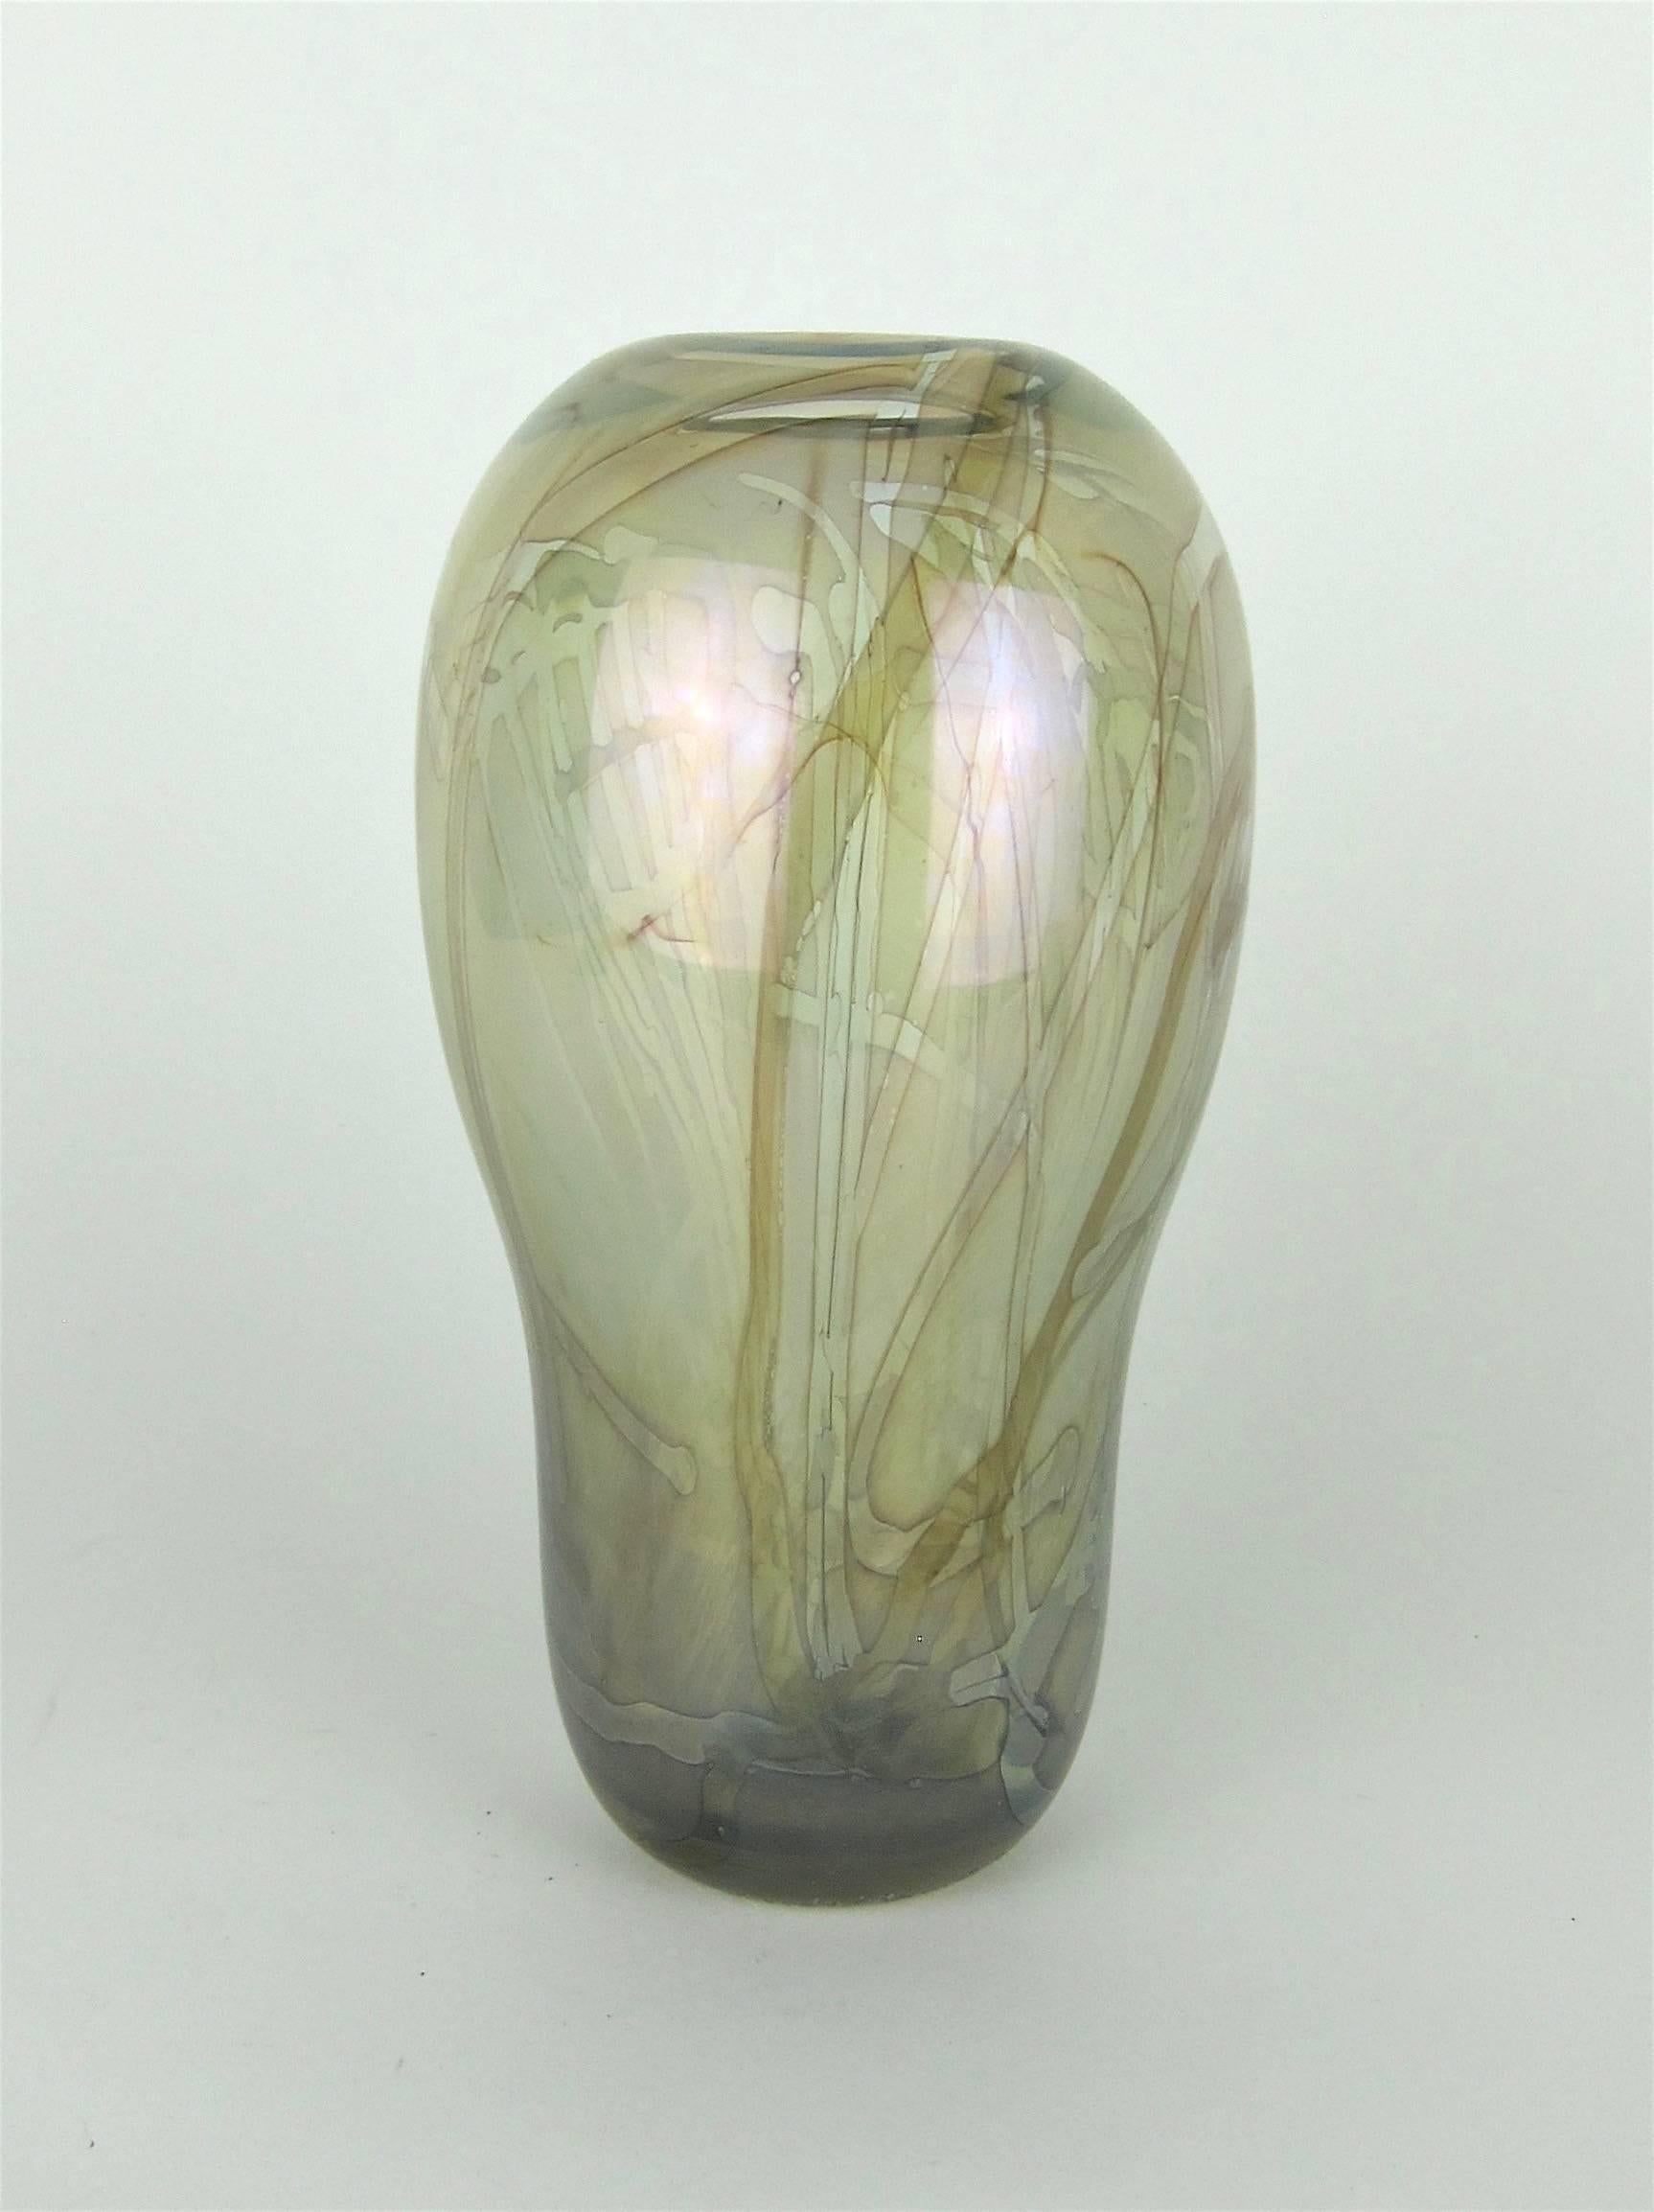 American Signed Robert William Bartlett Iridescent Studio Glass Vase from 1974